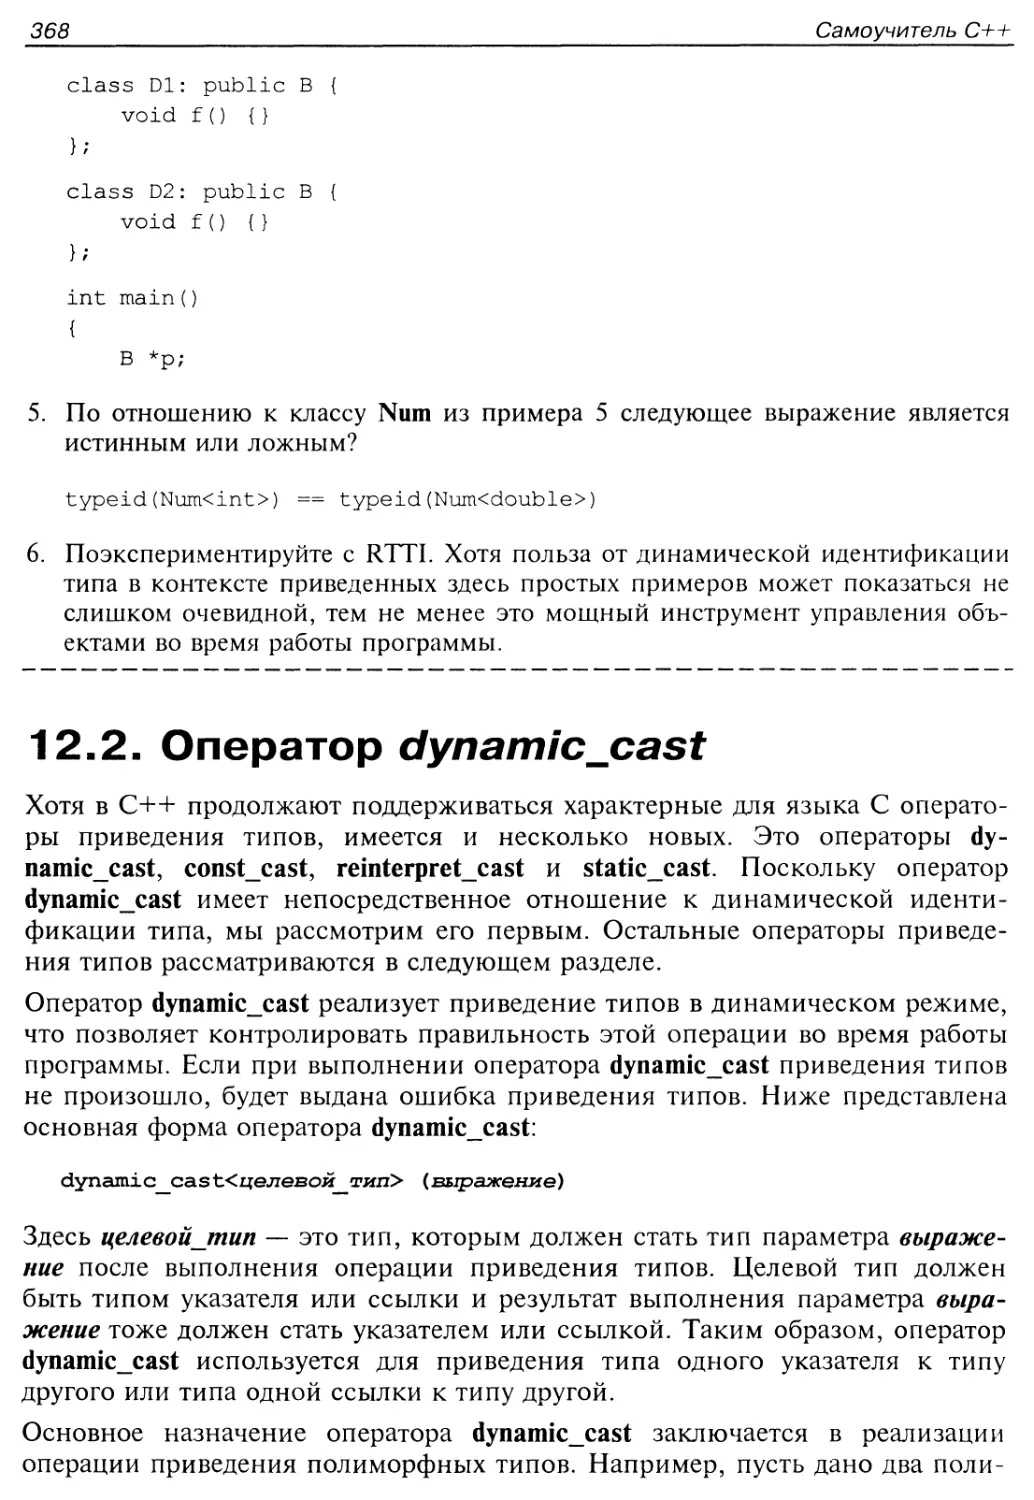 12.2. Оператор dynamic_cast